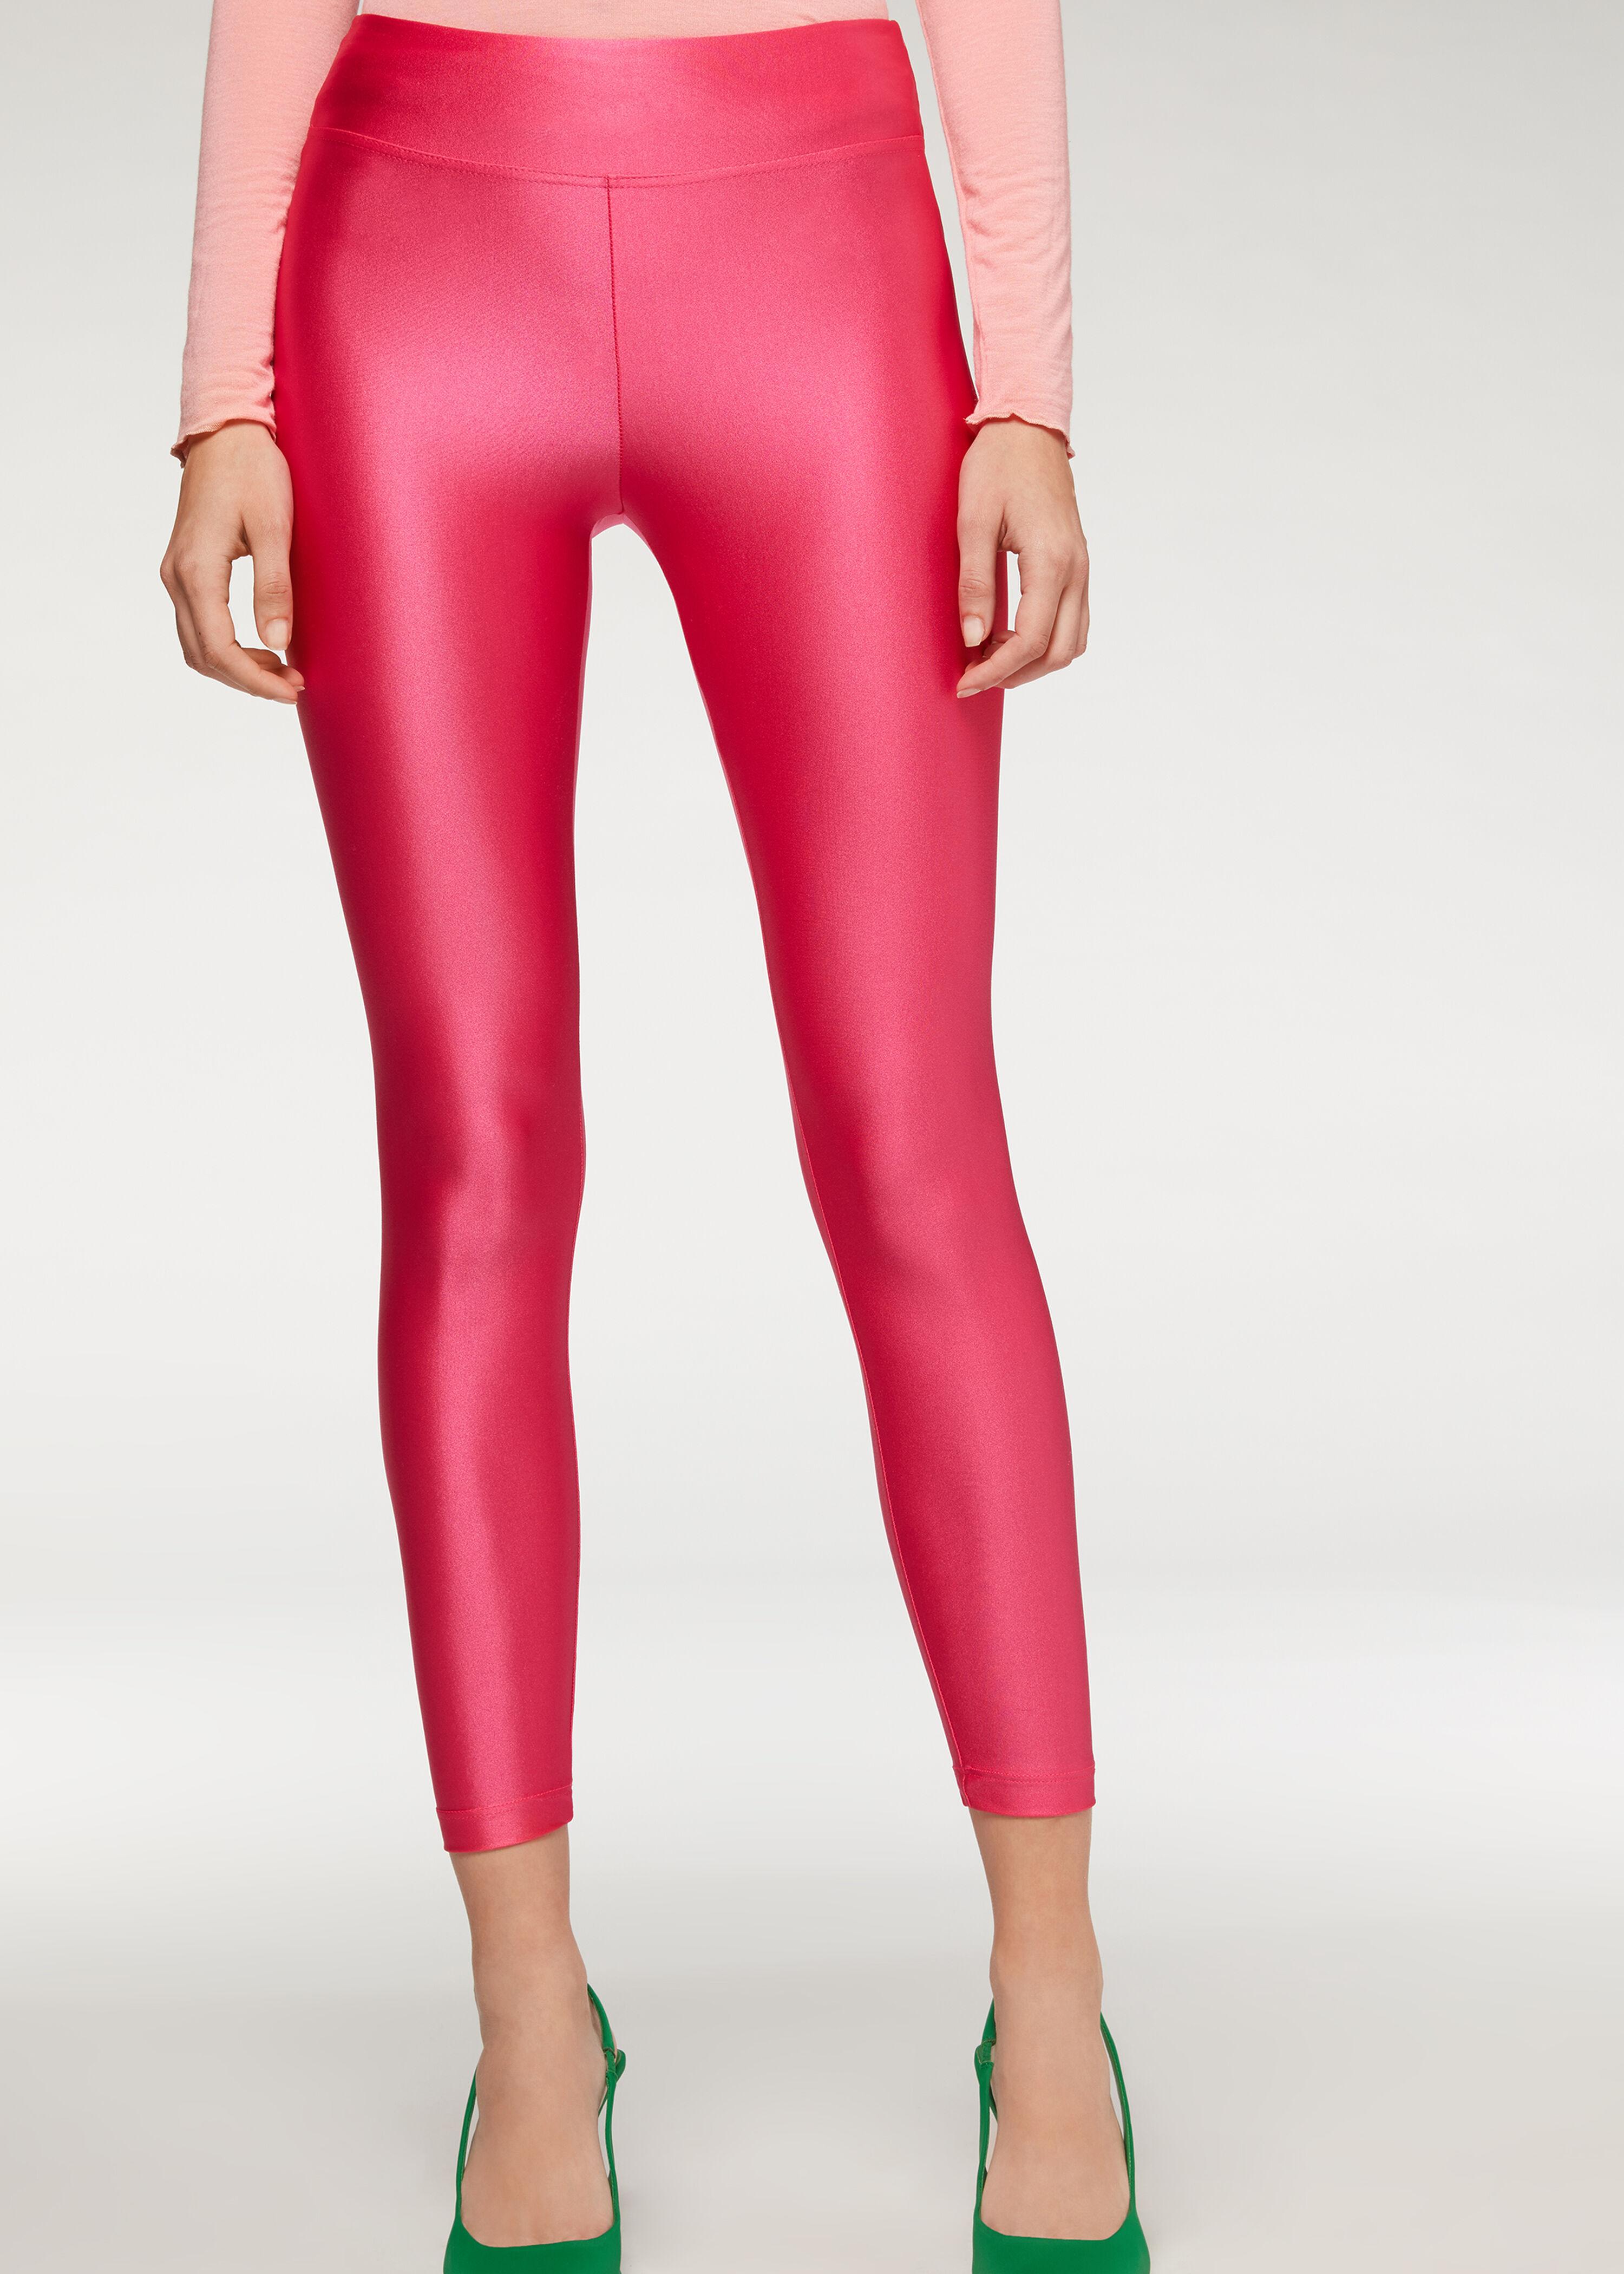 Calzedonia Super Shiny Leggings in Pink